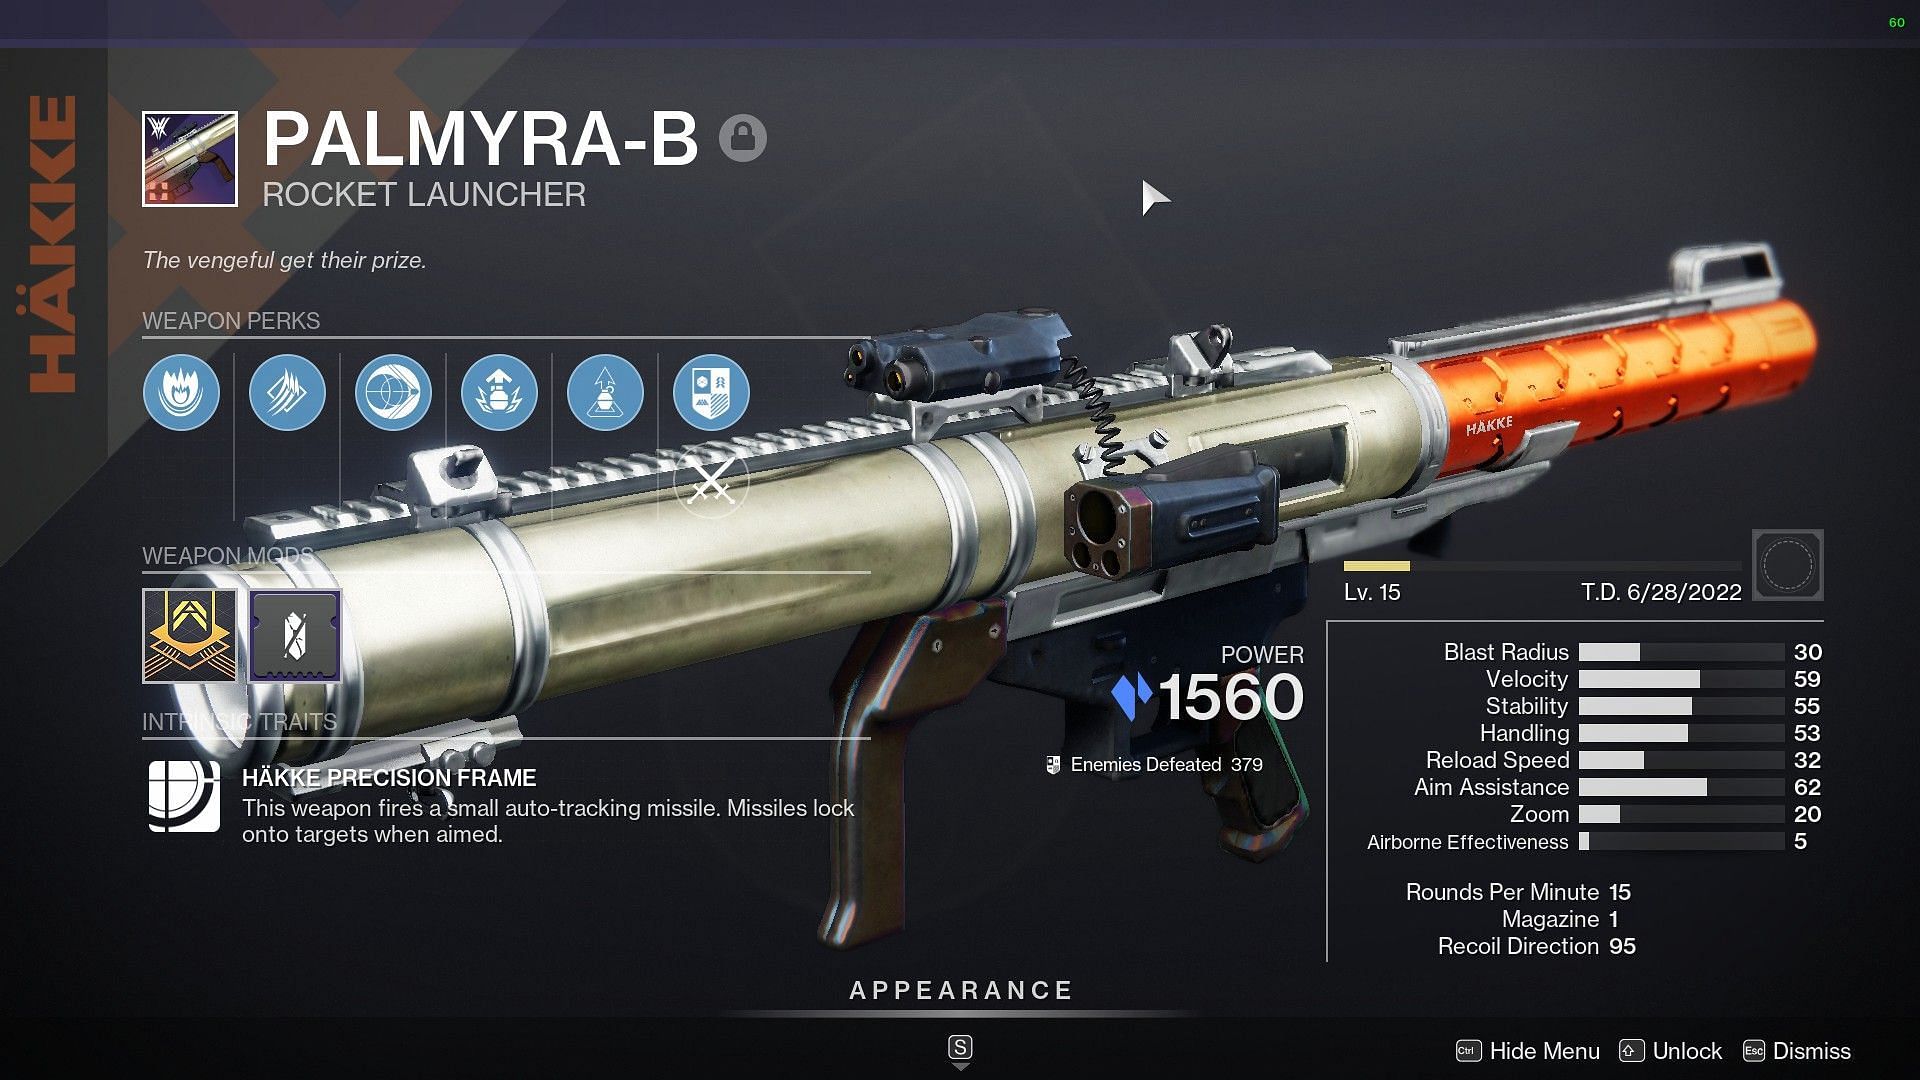 Palmyra-B Rocket Launcher (Image via Destiny 2)